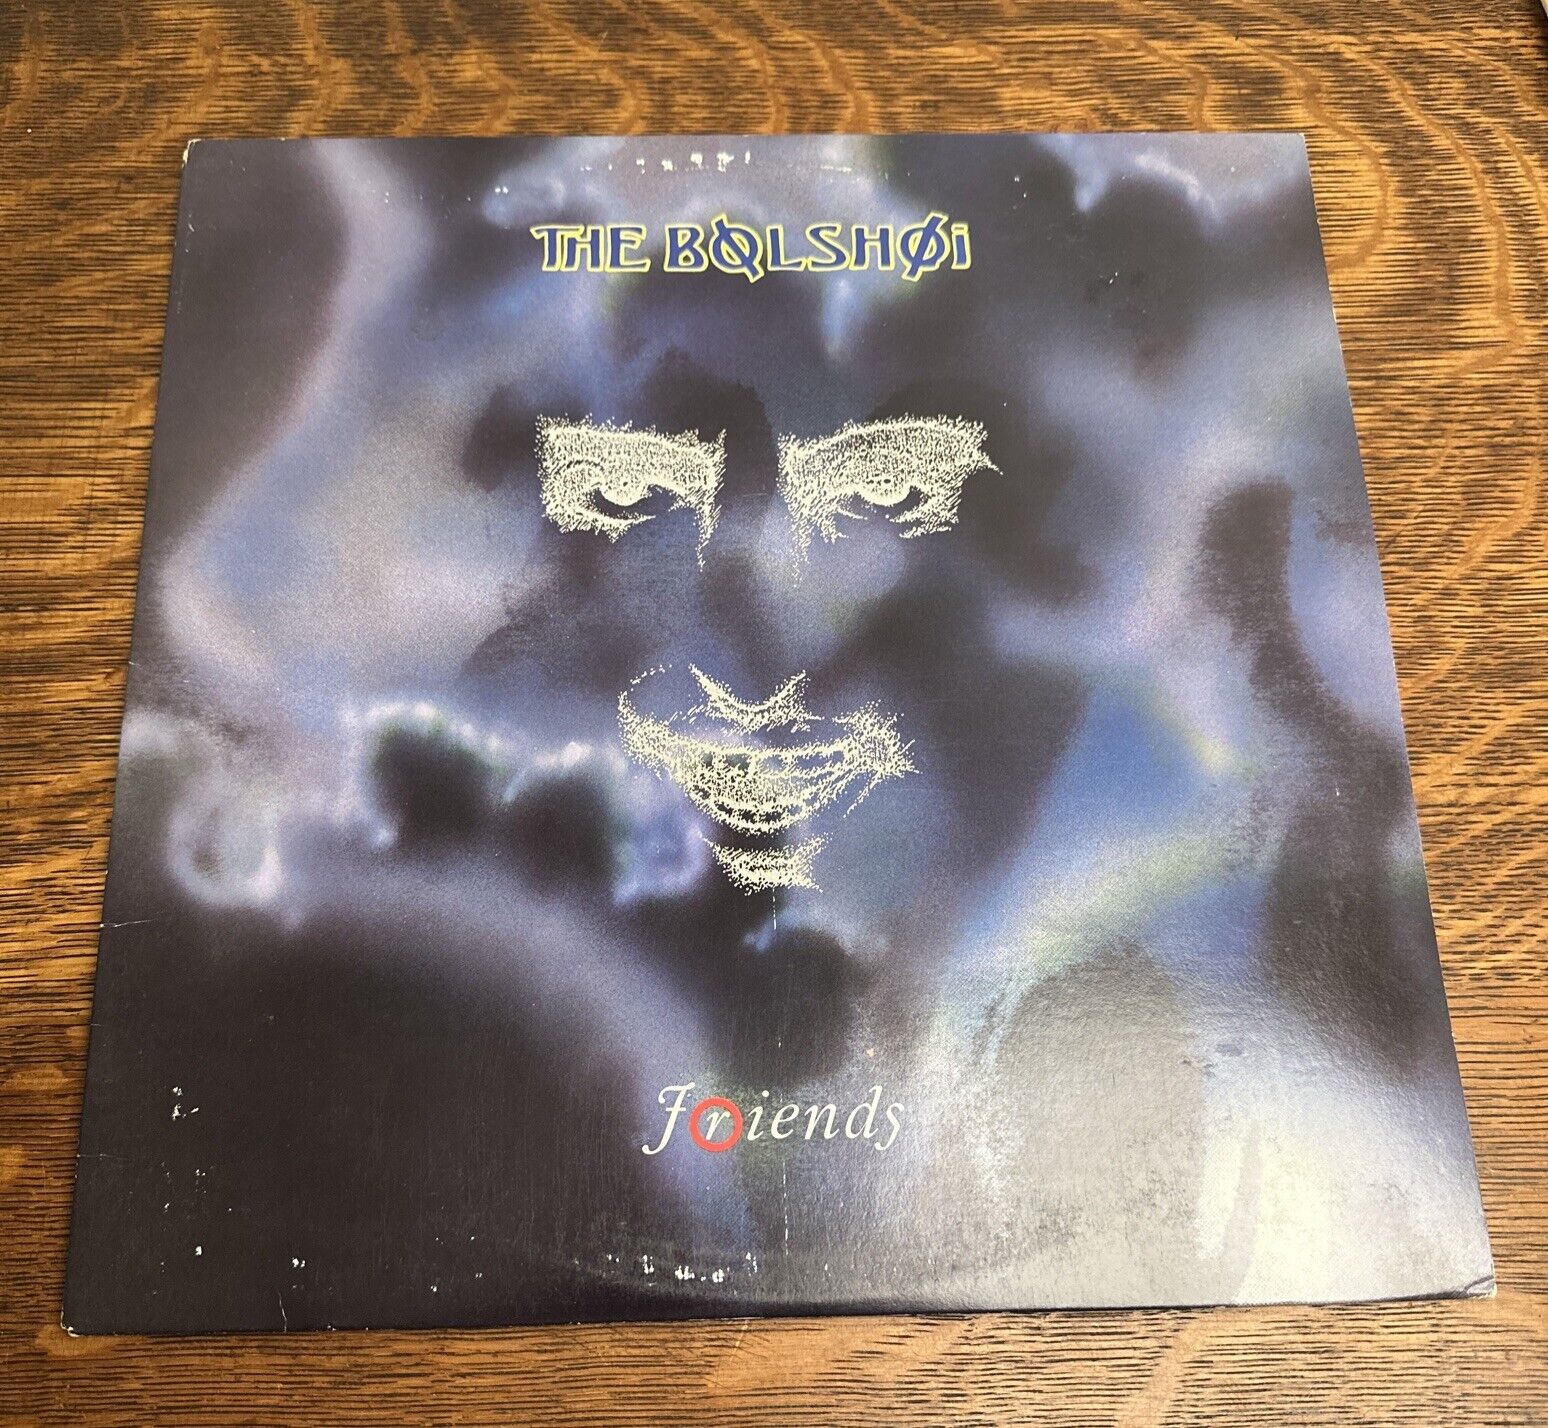 THE BOLSHOI - FRIENDS ORIG 1986 US 12" VINYL LP IRS 5814, Ex, Promo, Rare